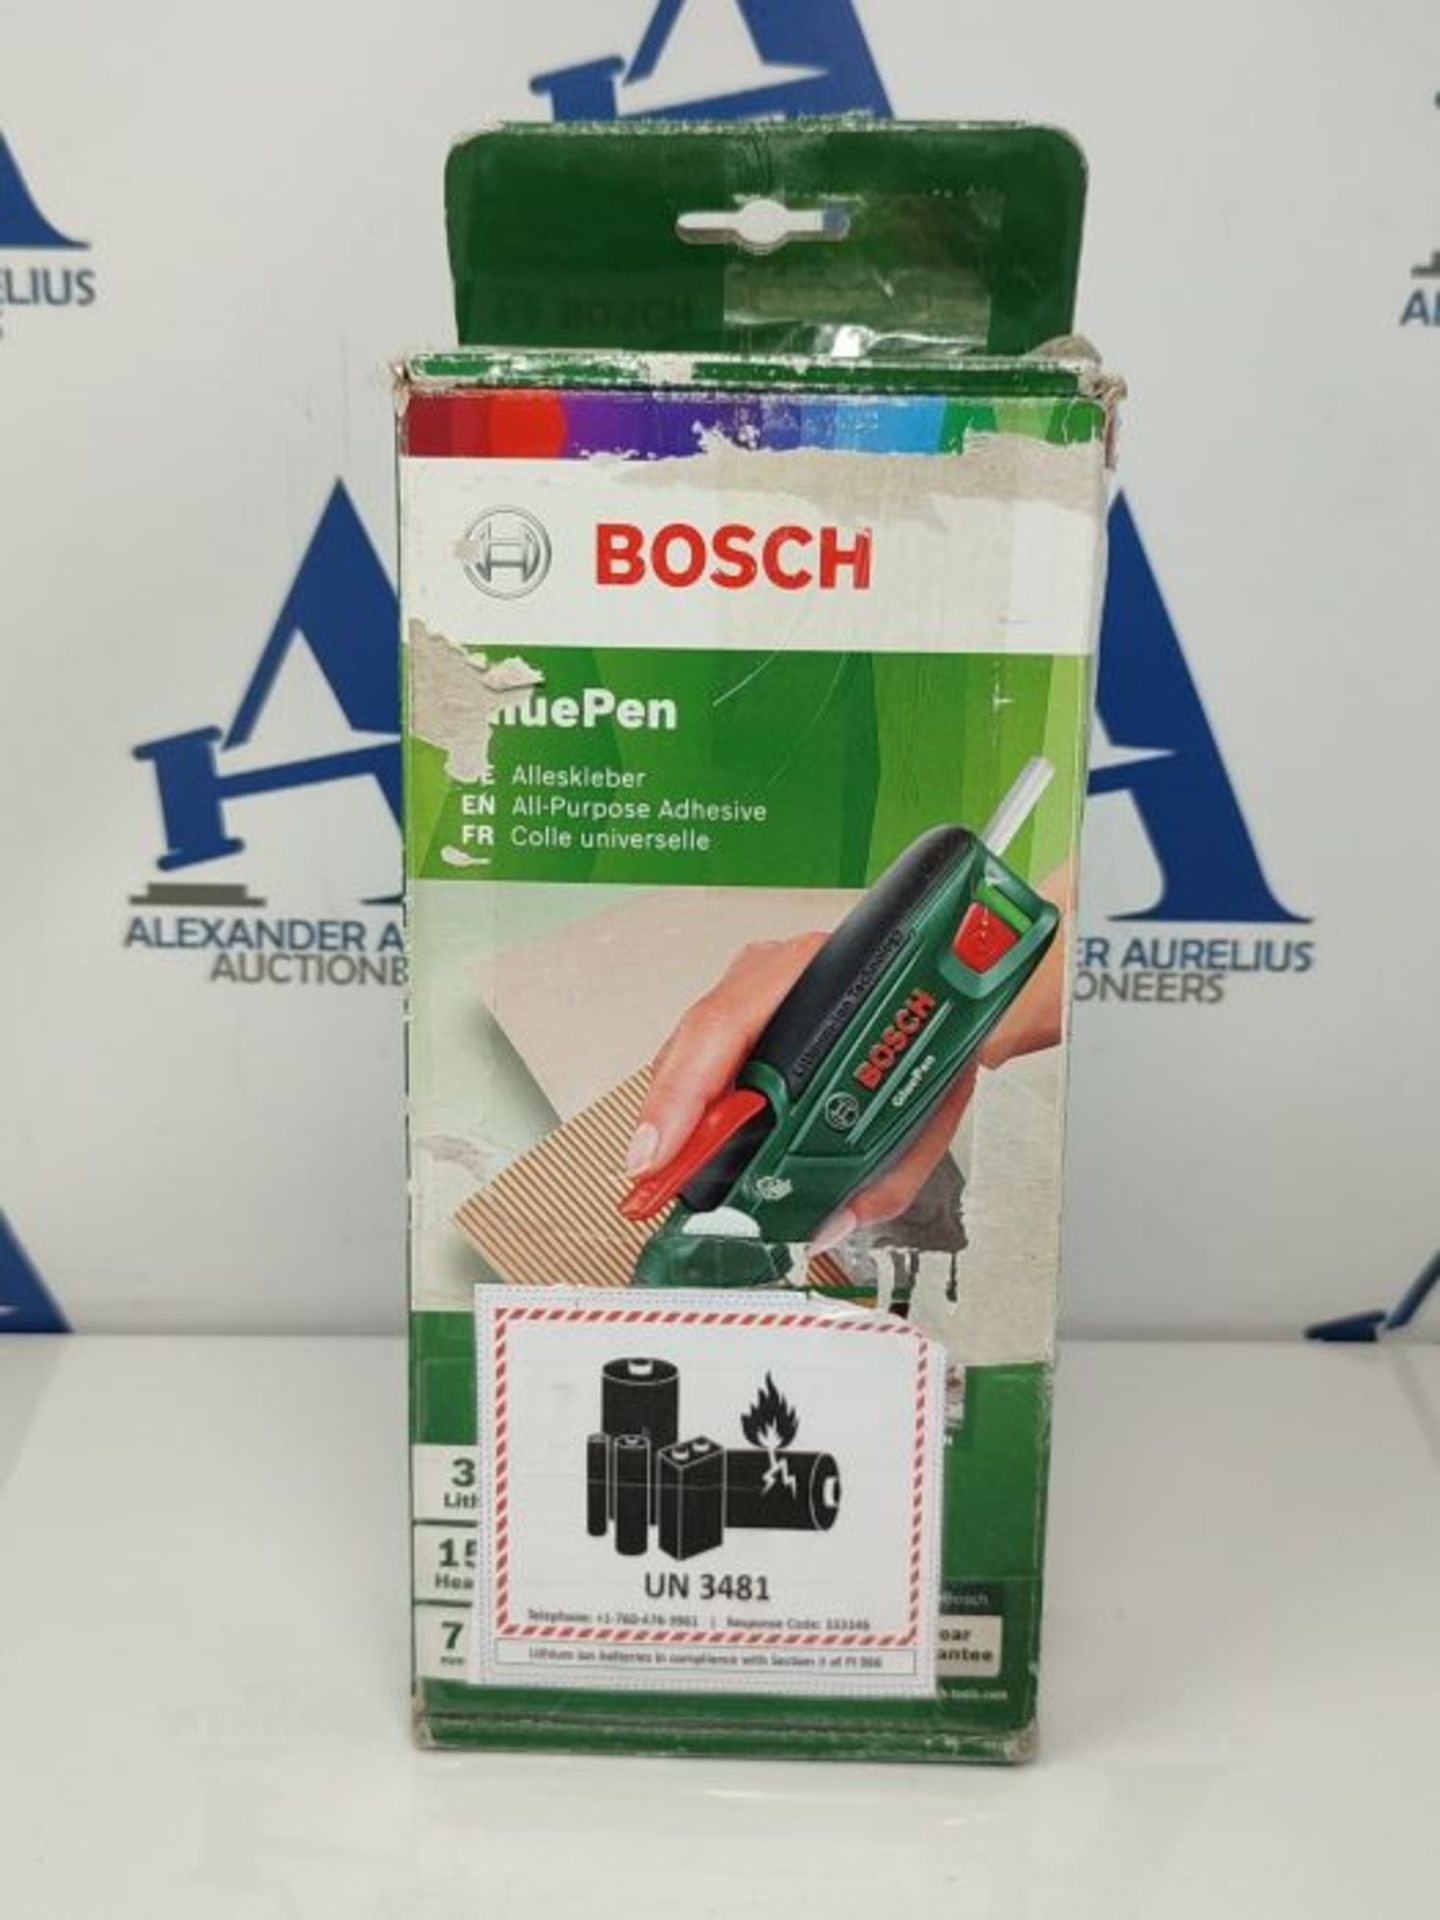 Bosch Home and Garden Cordless Hot Glue Gun GluePen (Micro USB Charger, 4 x Ultrapower - Image 2 of 3